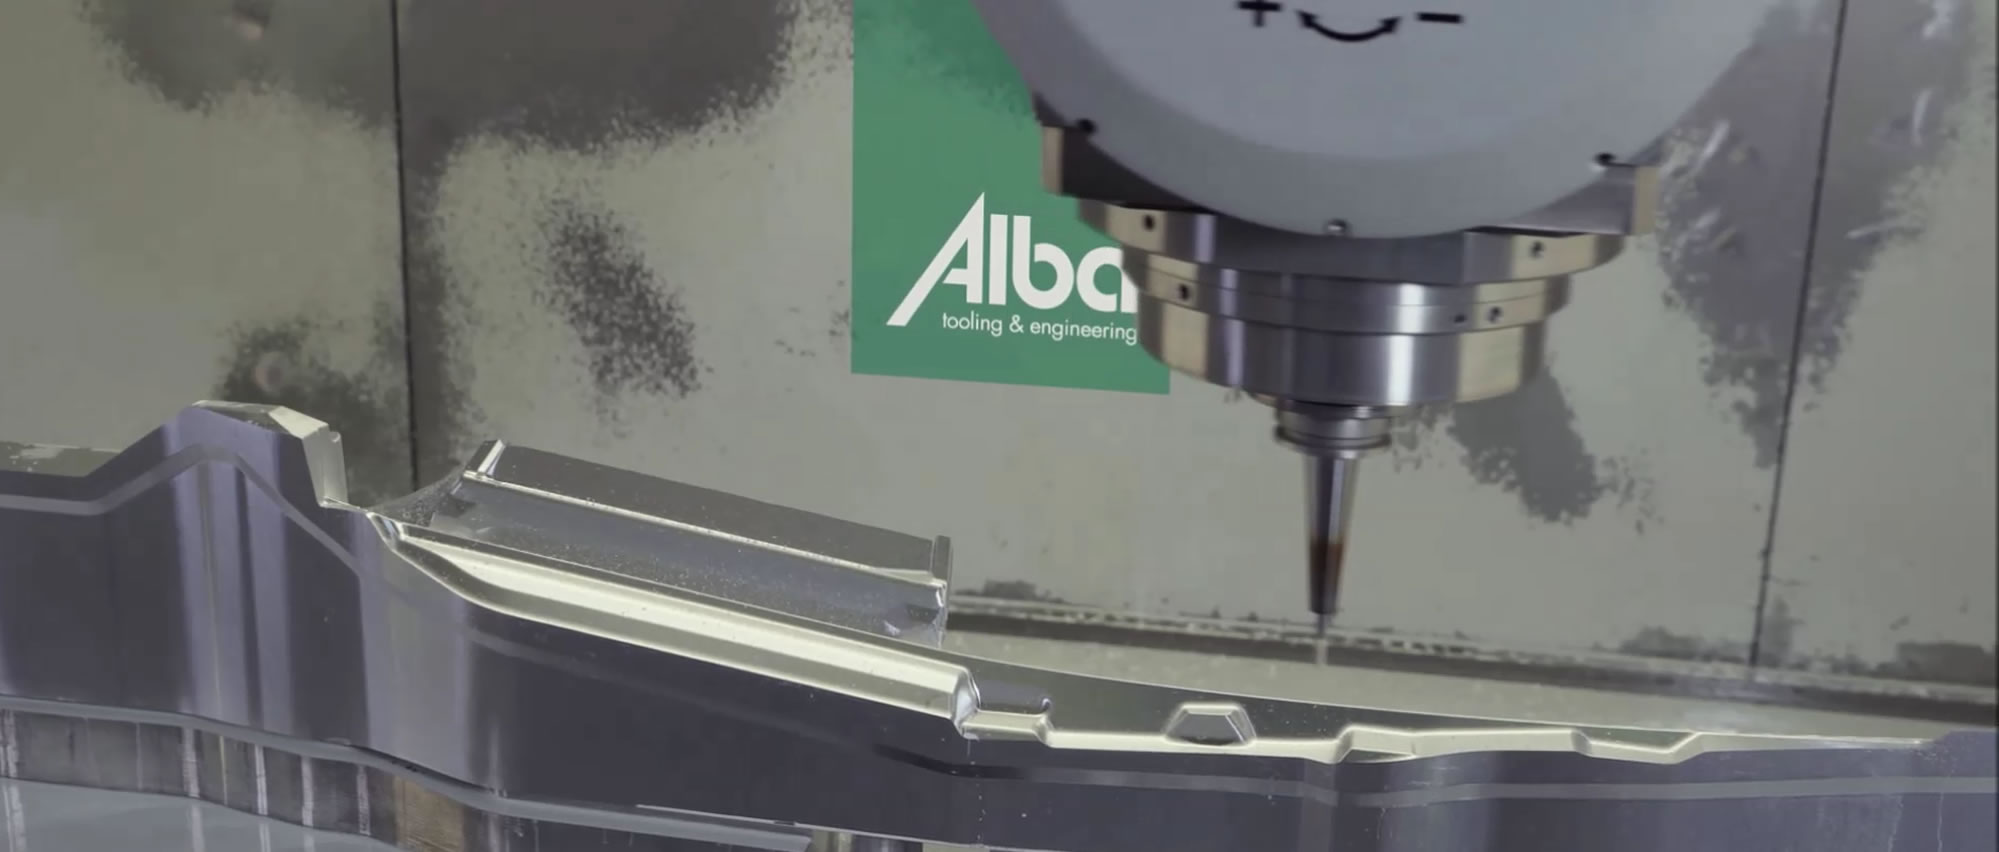 Alba tooling & engineering in Forstau, Österreich